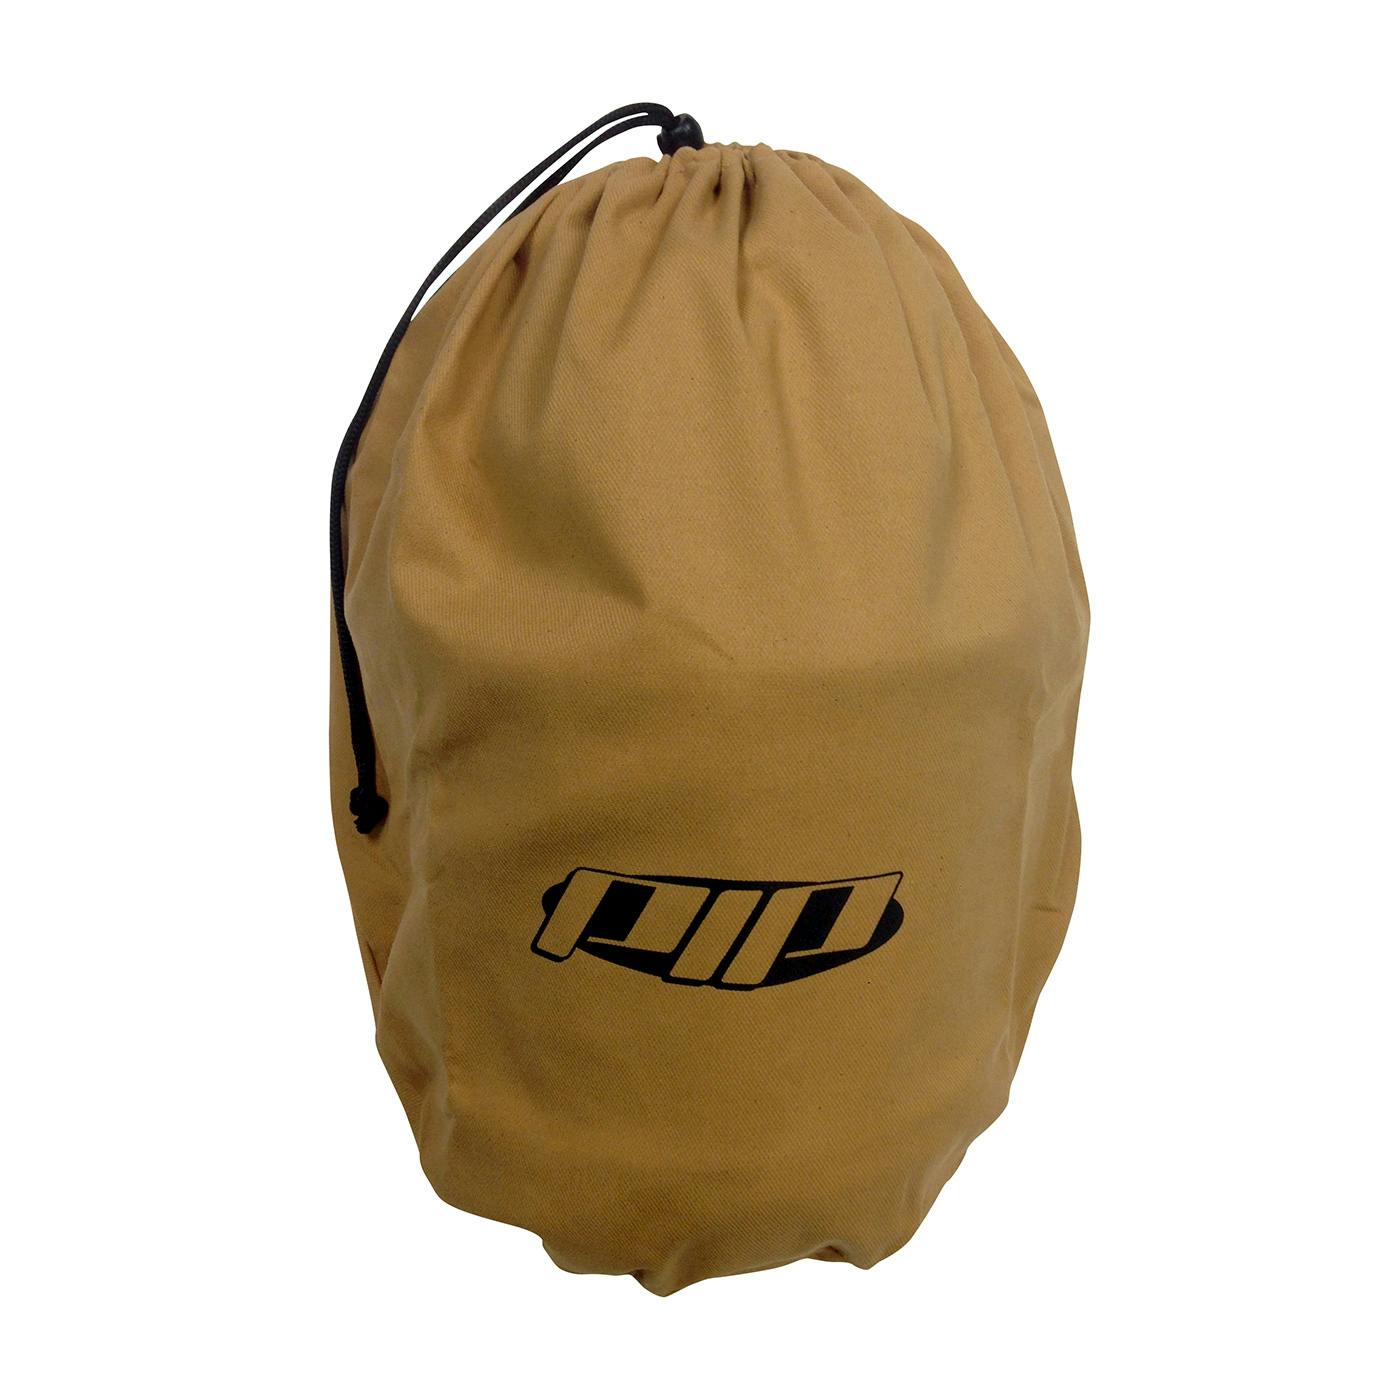 Arc Shield Storage Bag, Tan (9400-52508) - OS